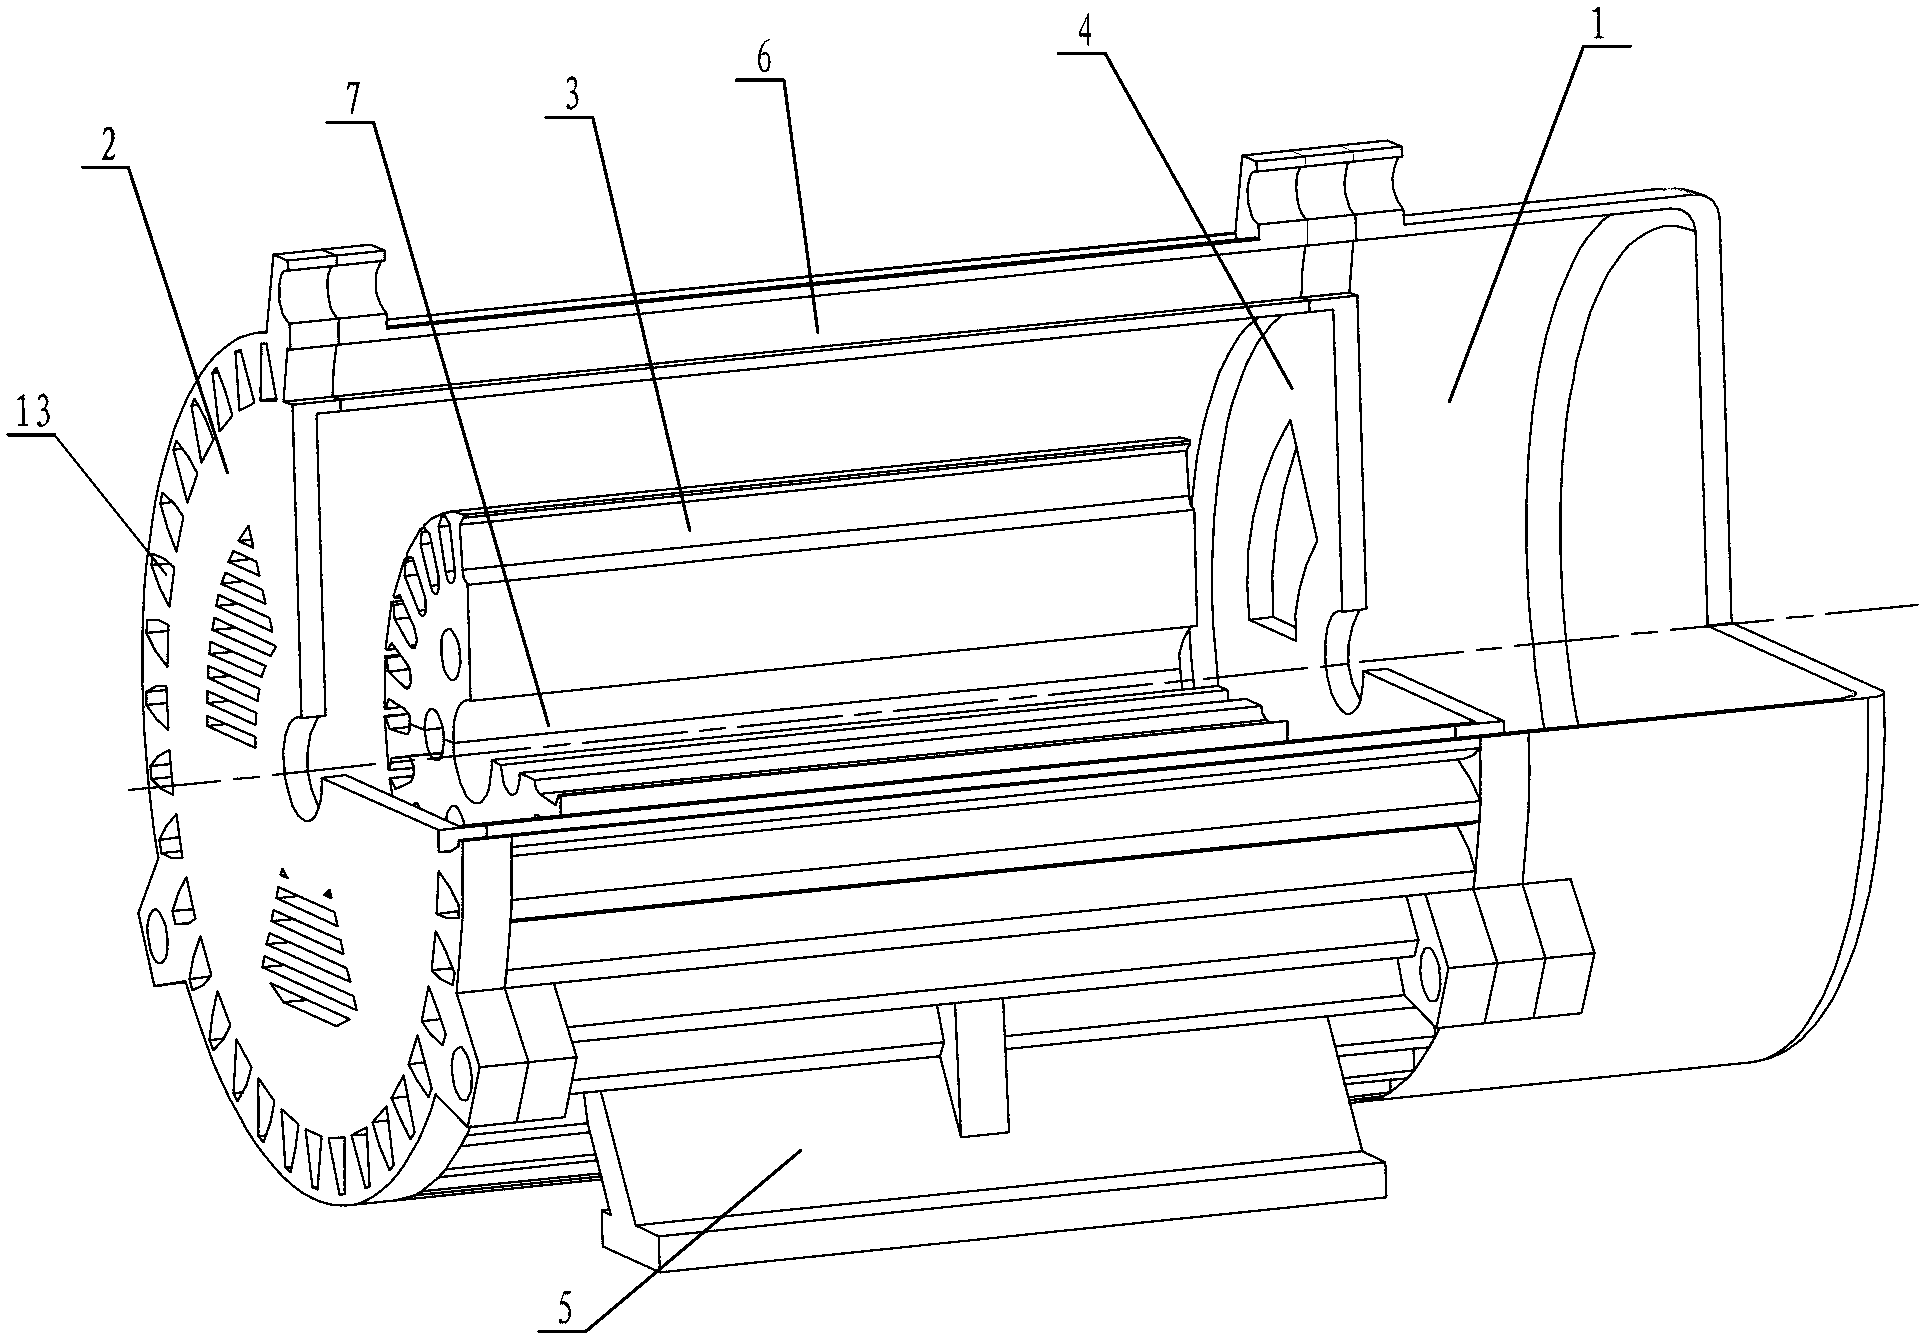 Multi-inner cavity U-shaped cooling system of motor